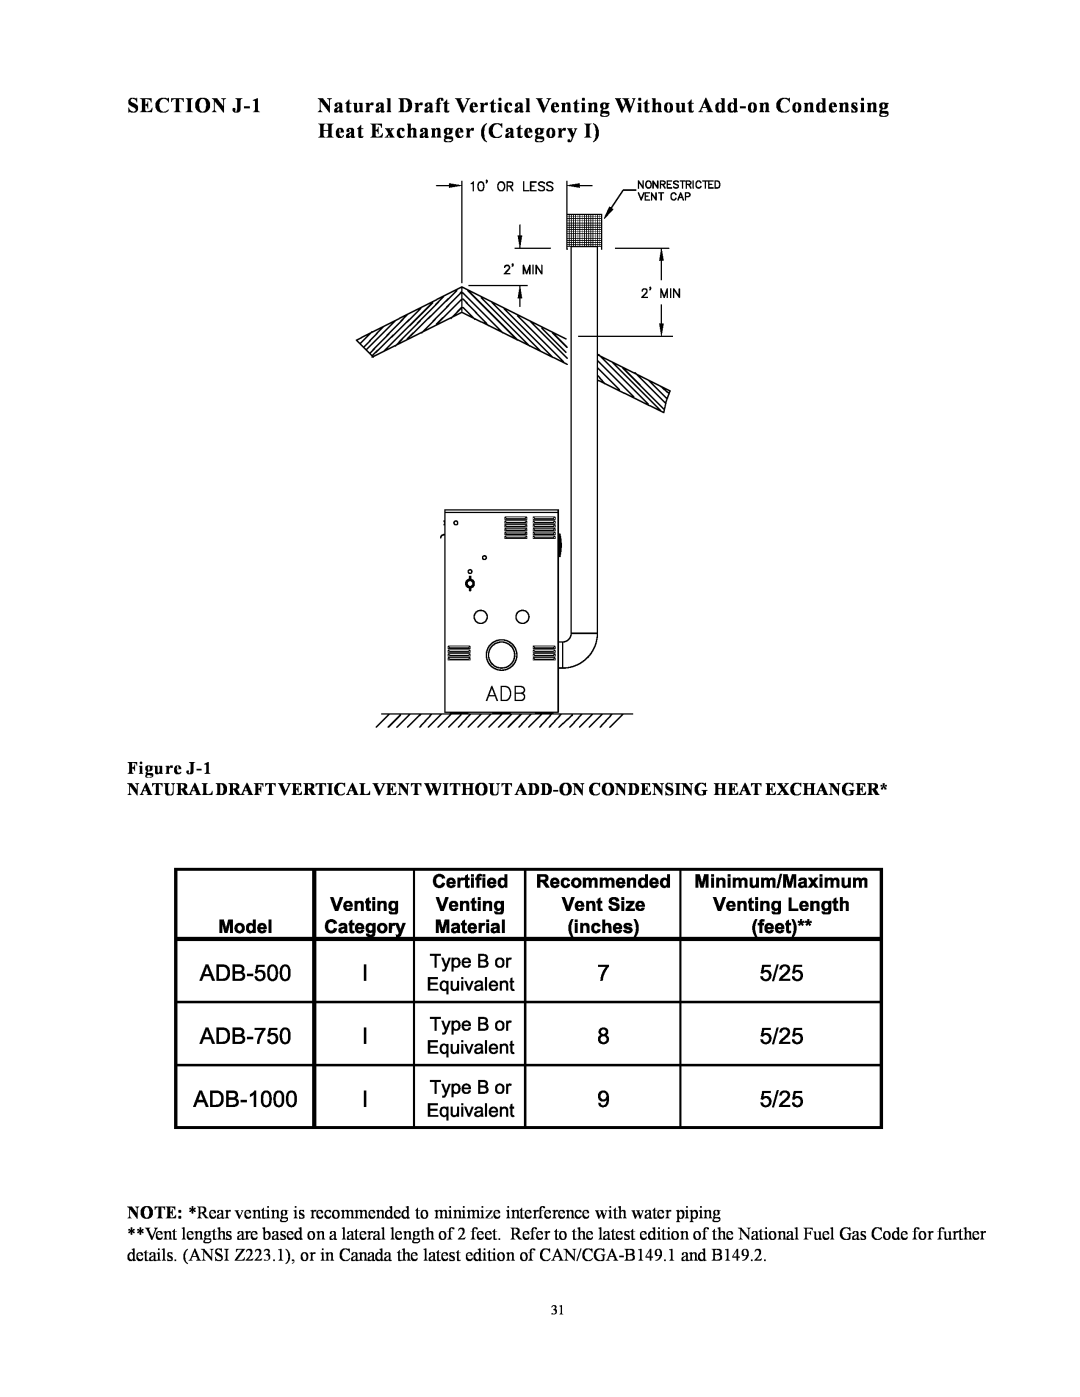 Raypak 750, 500, 1000 installation instructions Figure J-1 